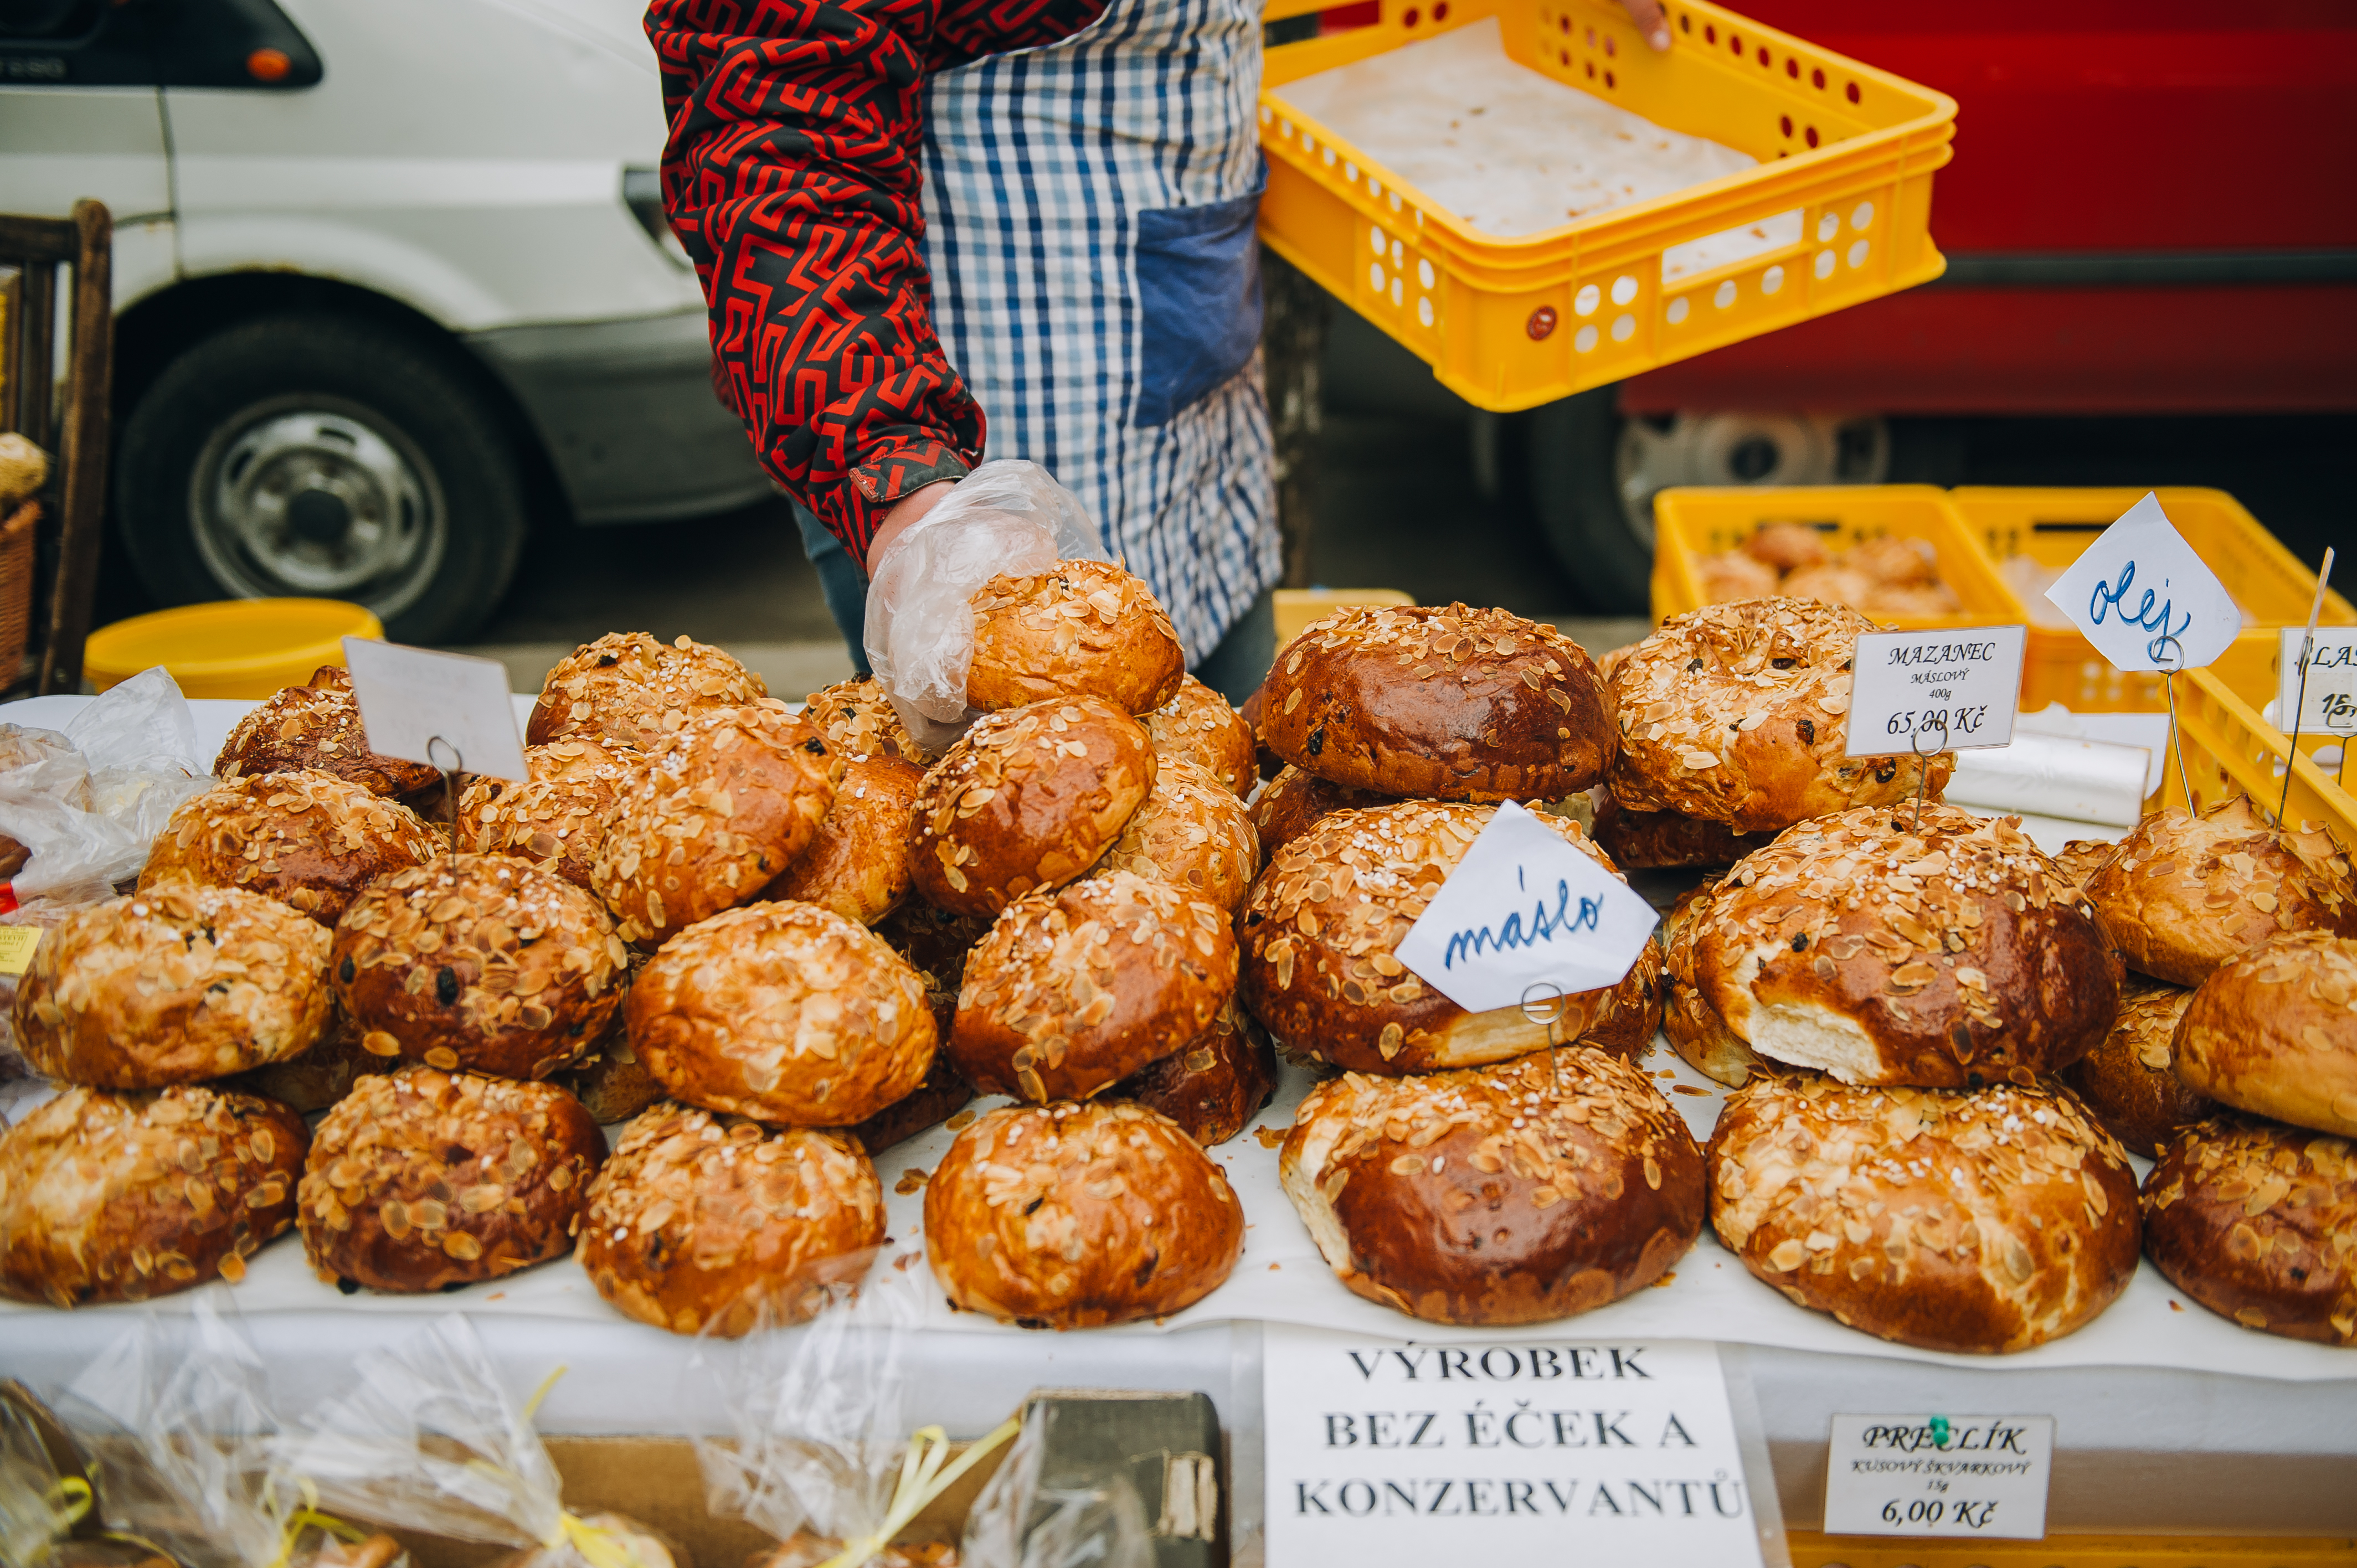 mazanec, sweet yeast dough bread sold in the market